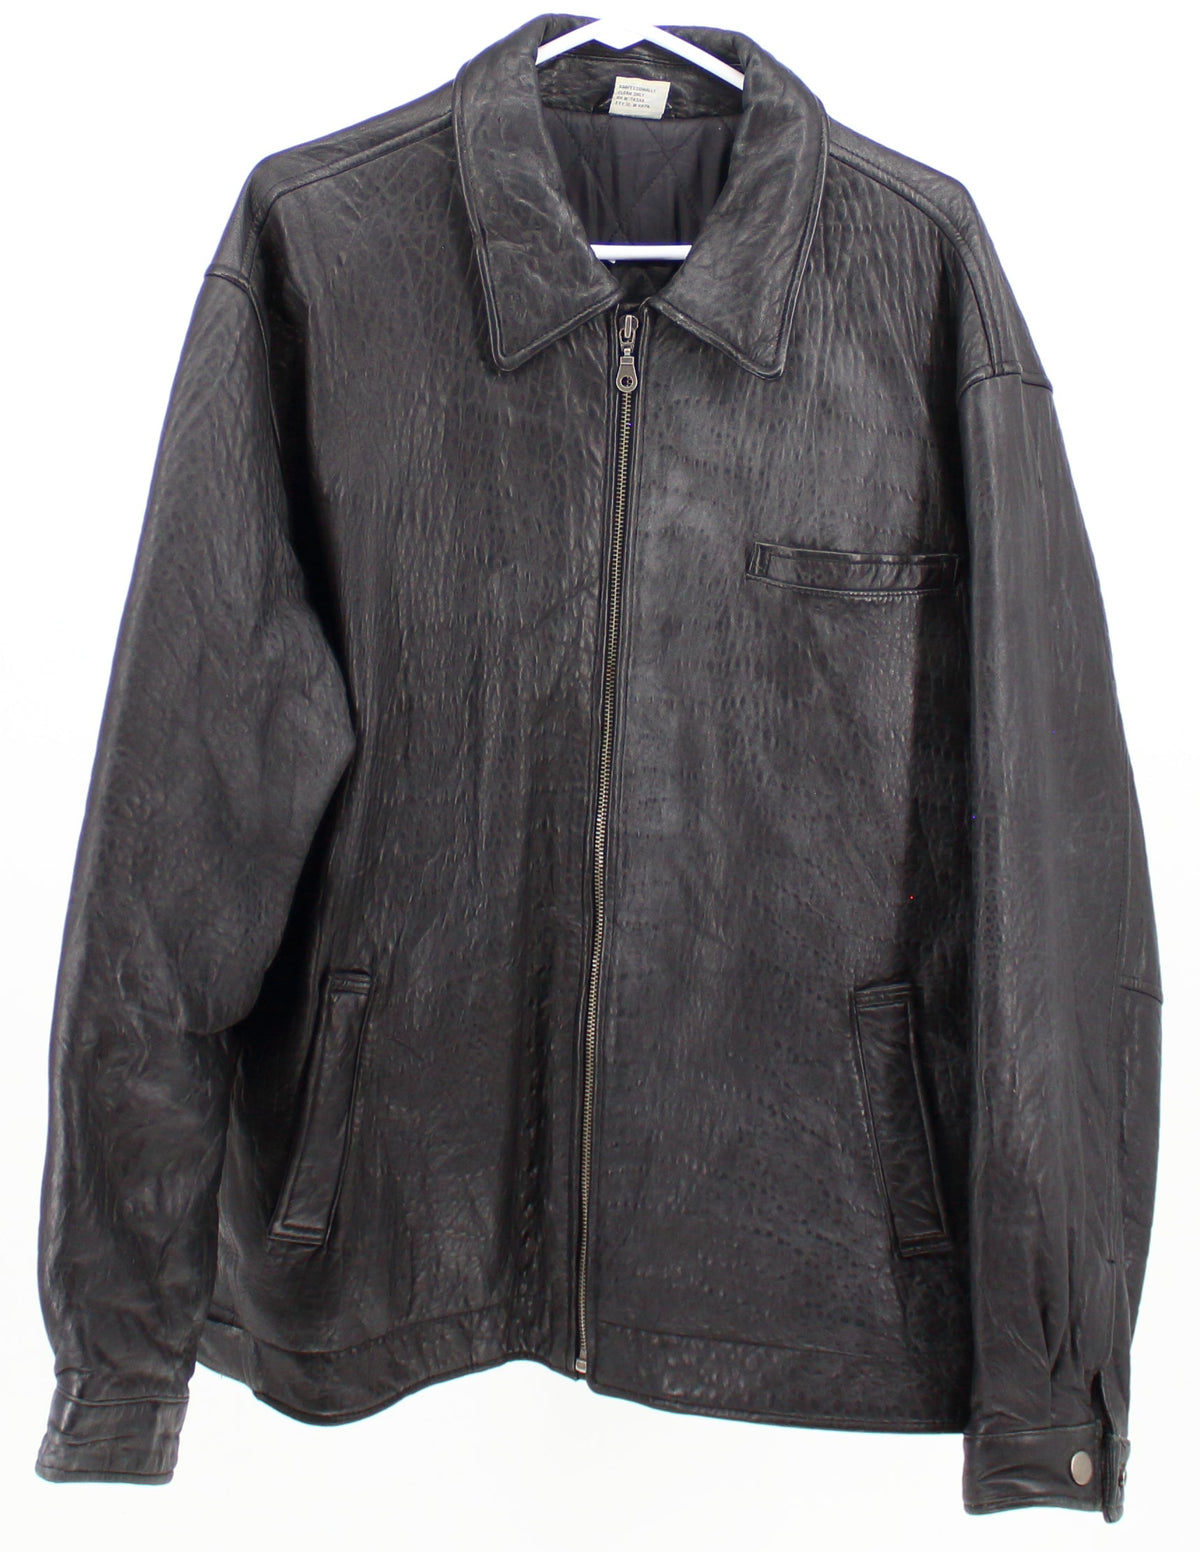 Black Textured Leather Jacket